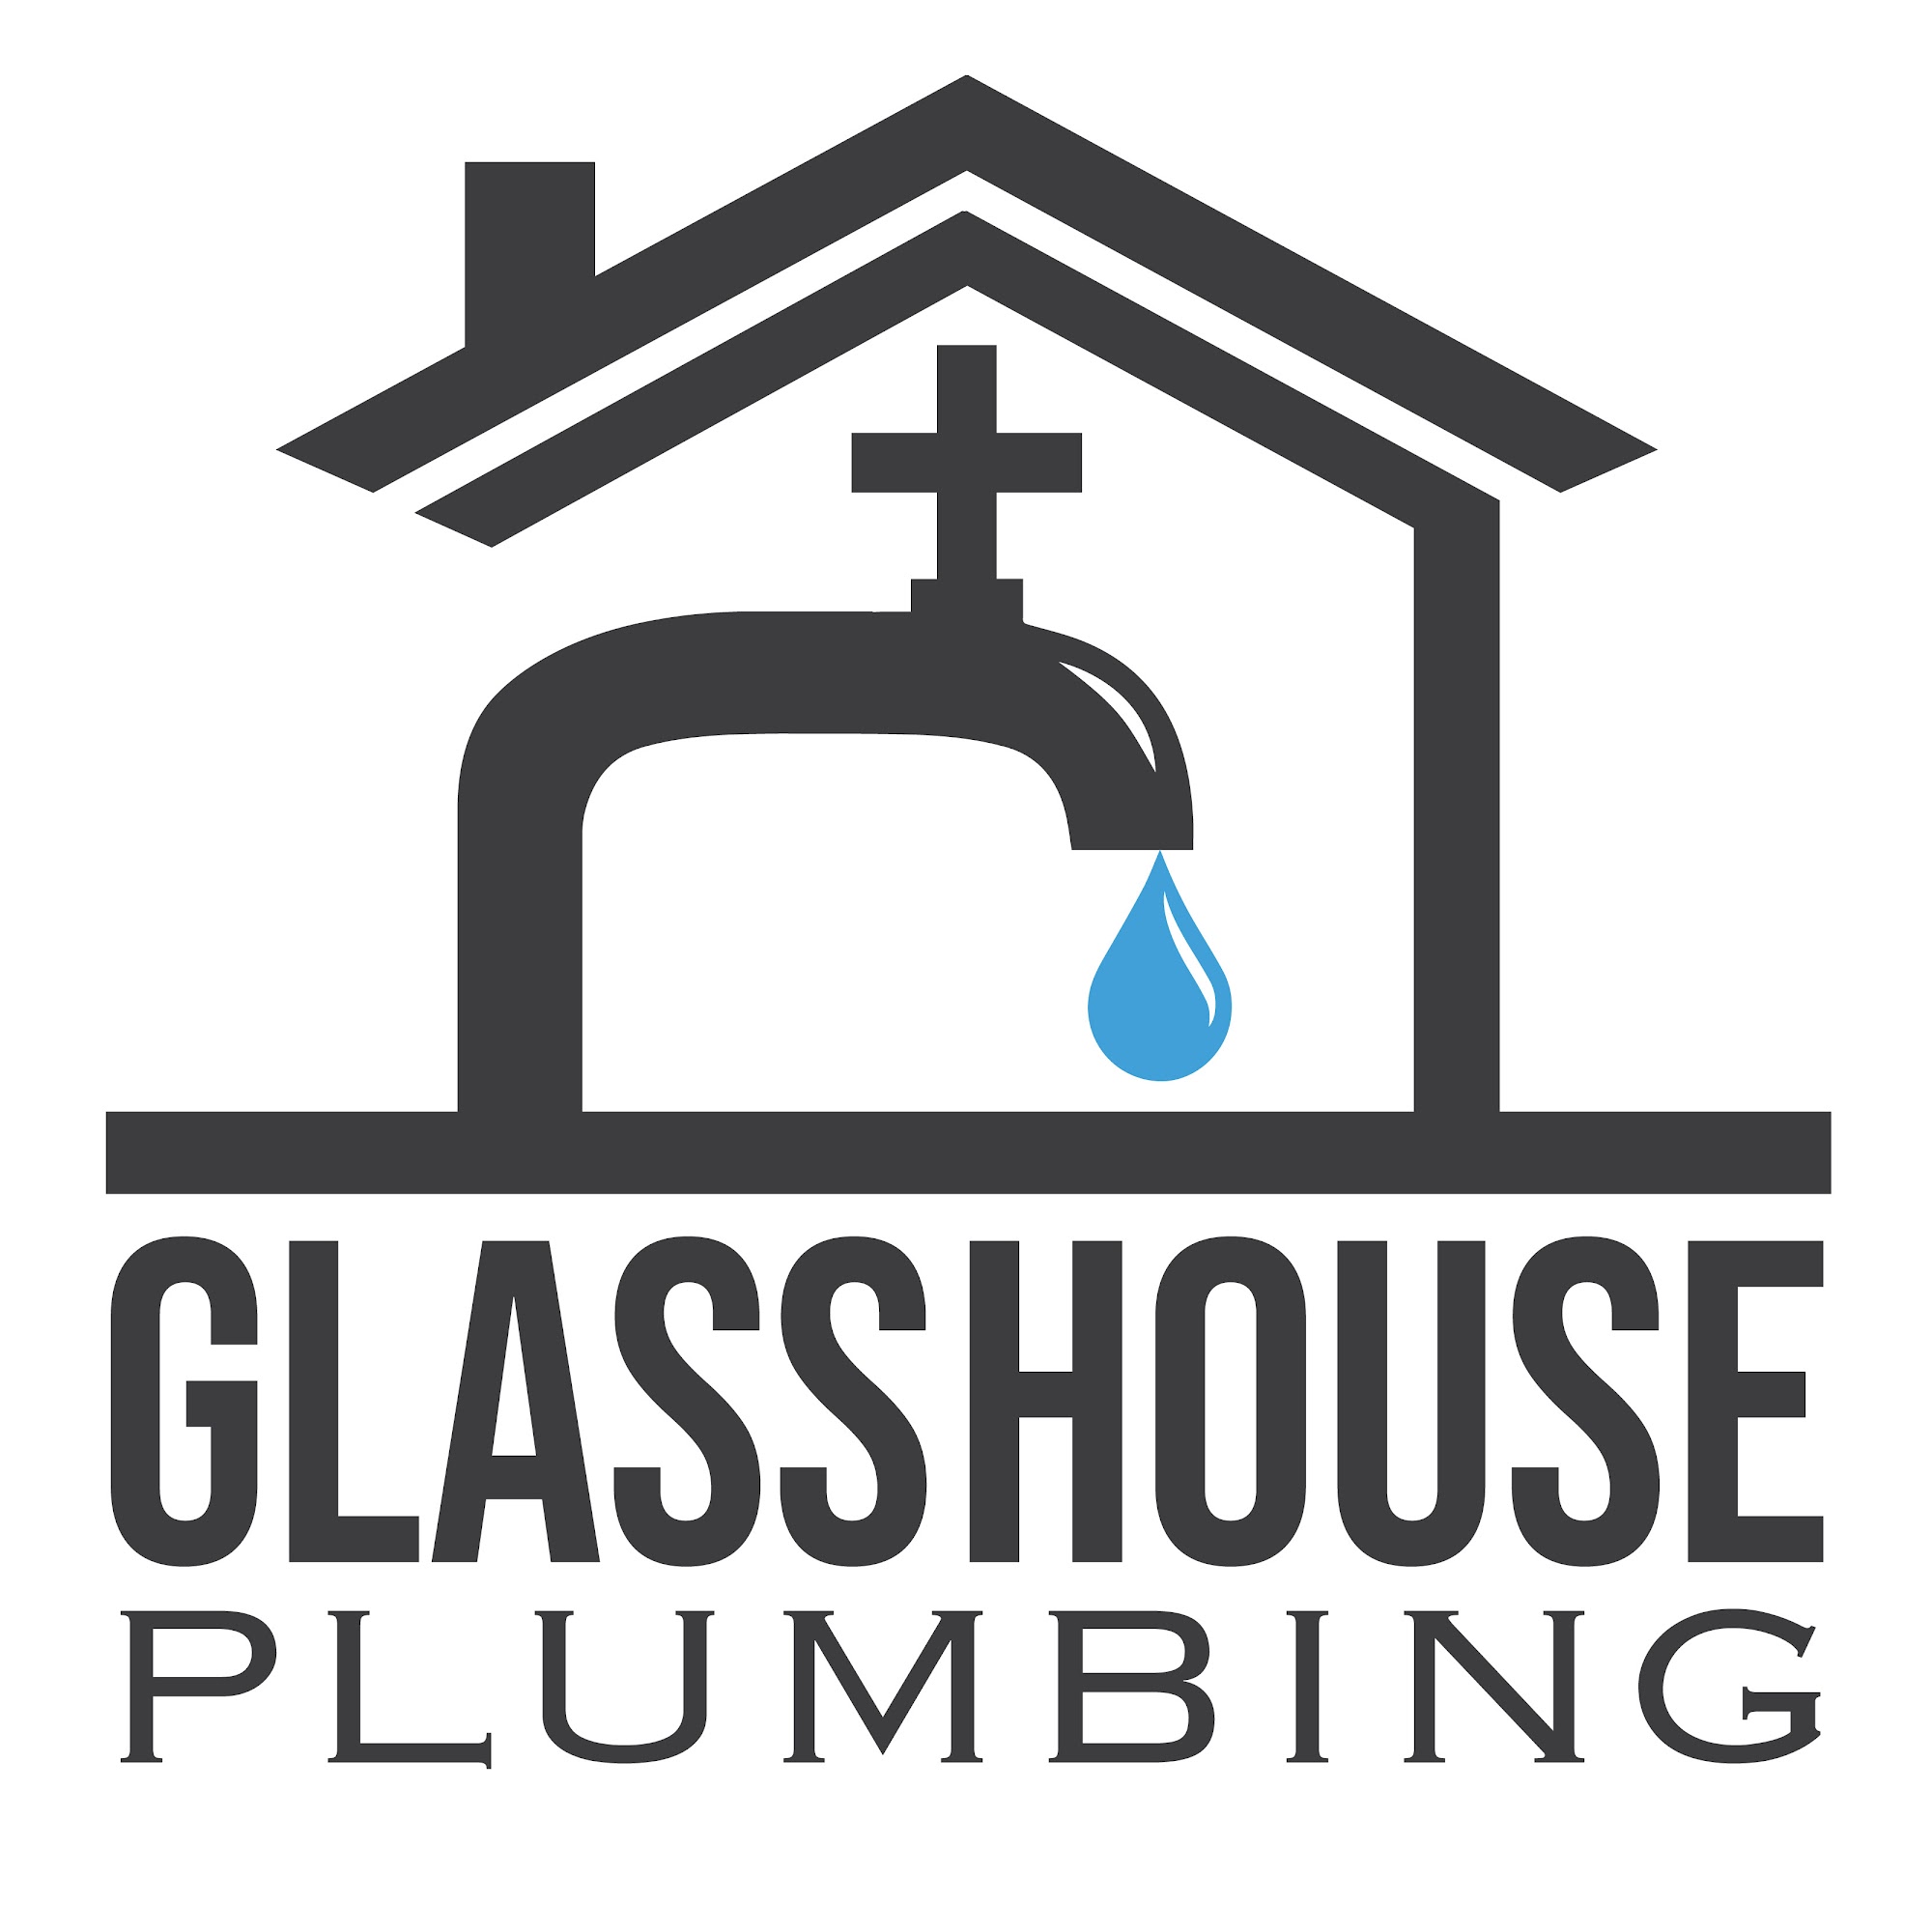 Glass House Plumbing 907 Scenic Rivers Blvd, Salem Missouri 65560